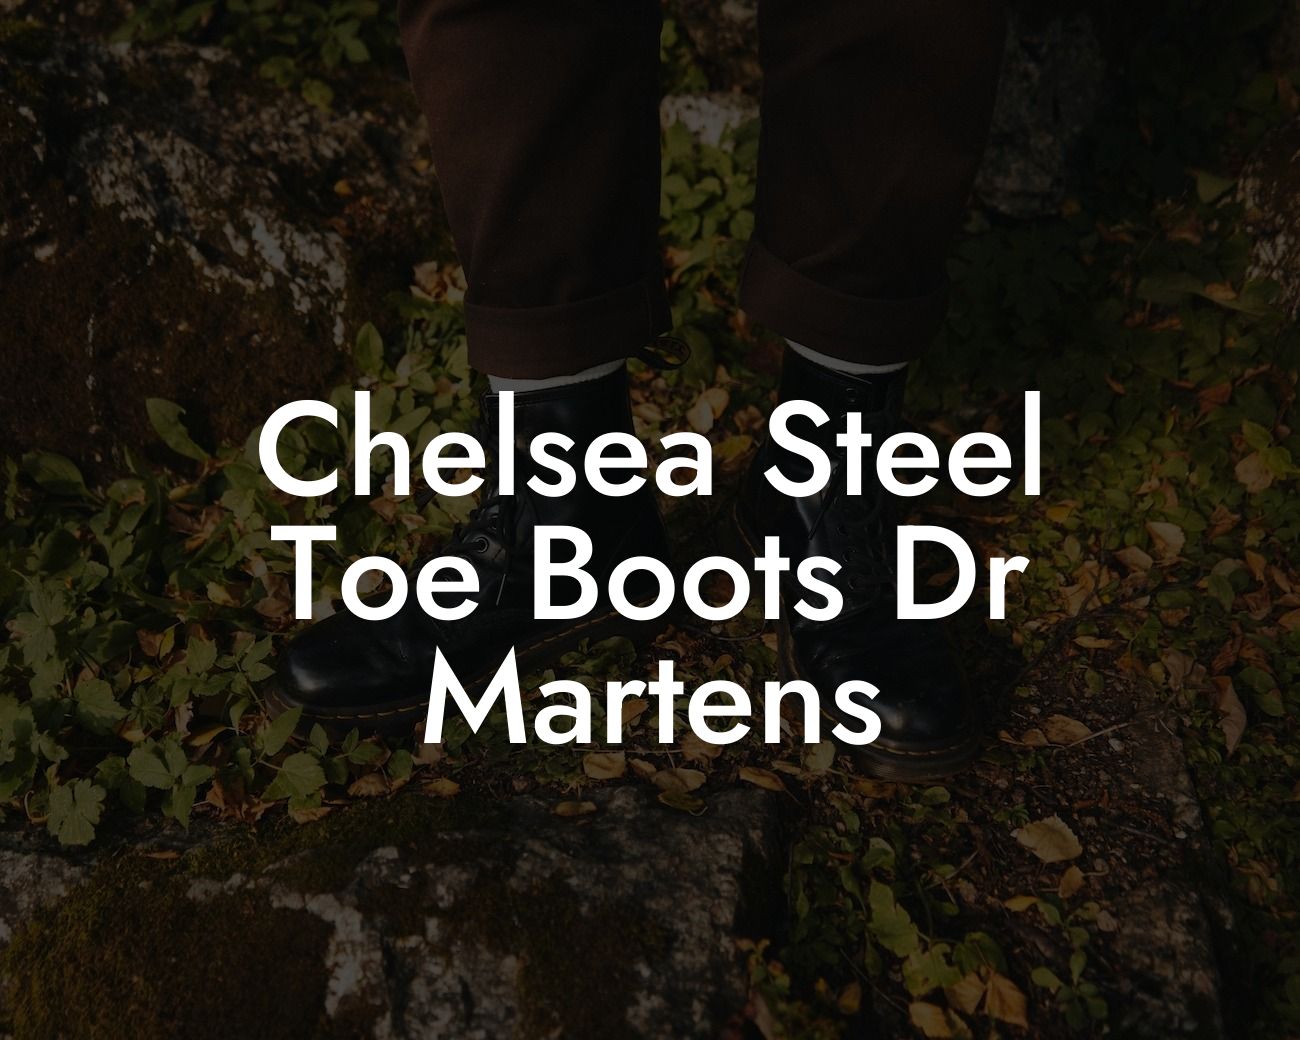 Chelsea Steel Toe Boots Dr Martens